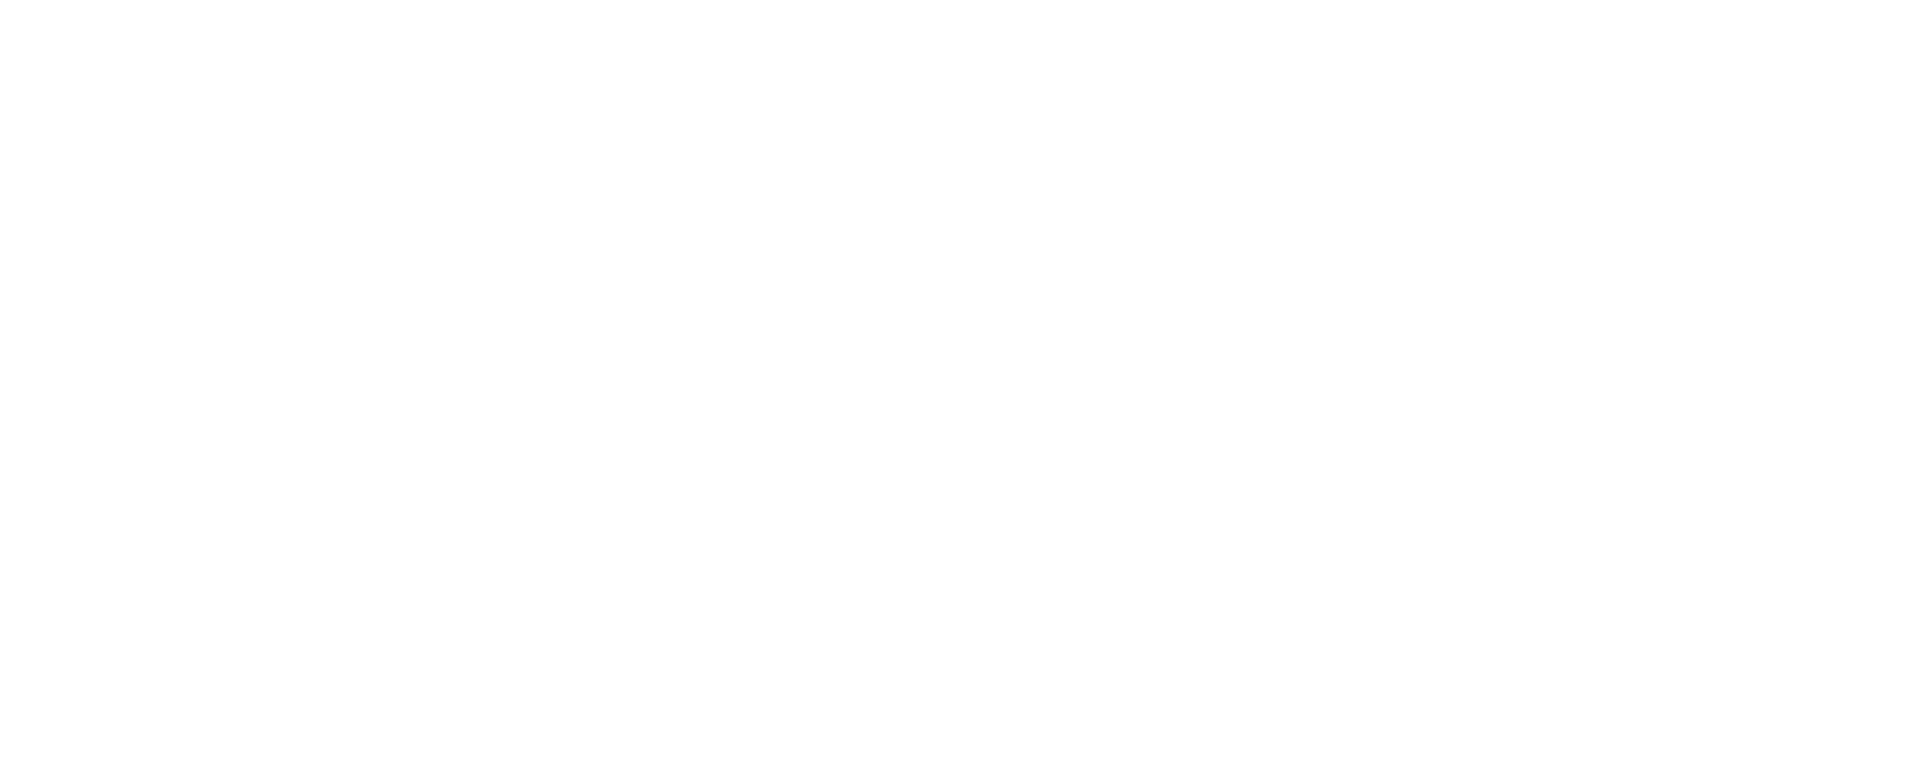 Customer Server Champion